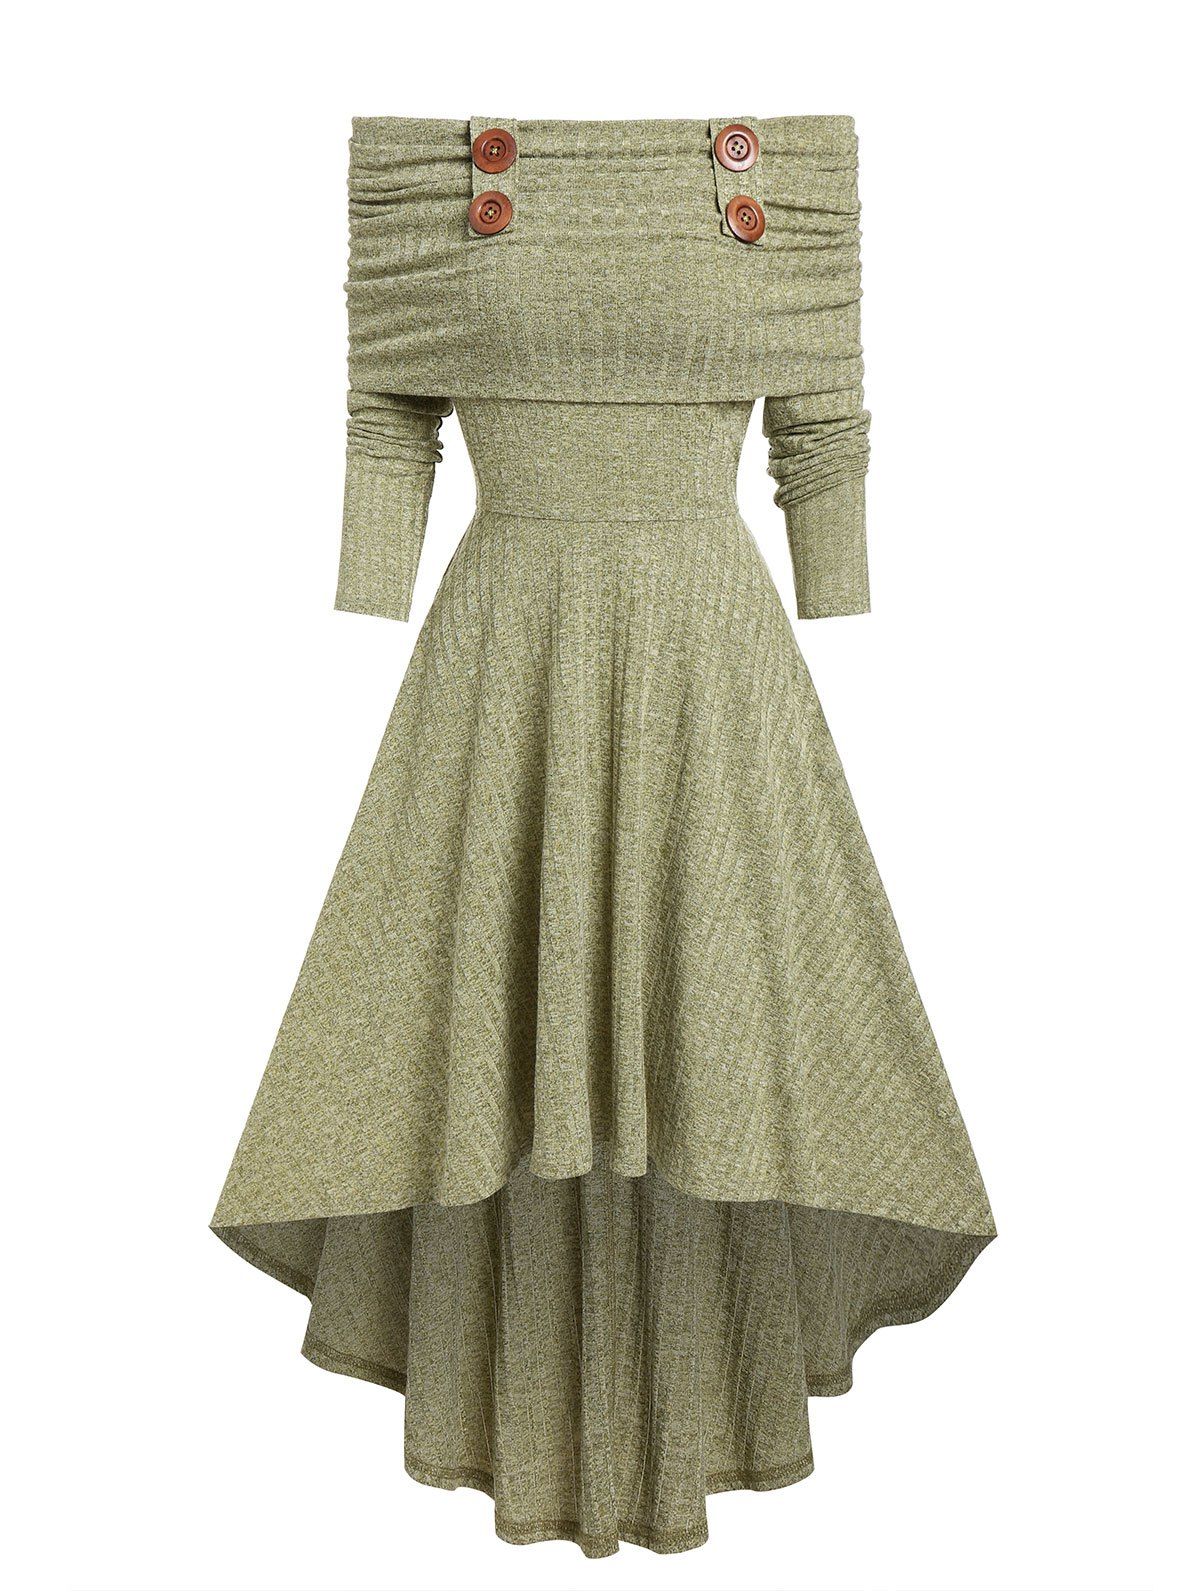 Foldover Off The Shoulder Convertible High Low Dress - LIGHT GREEN XL